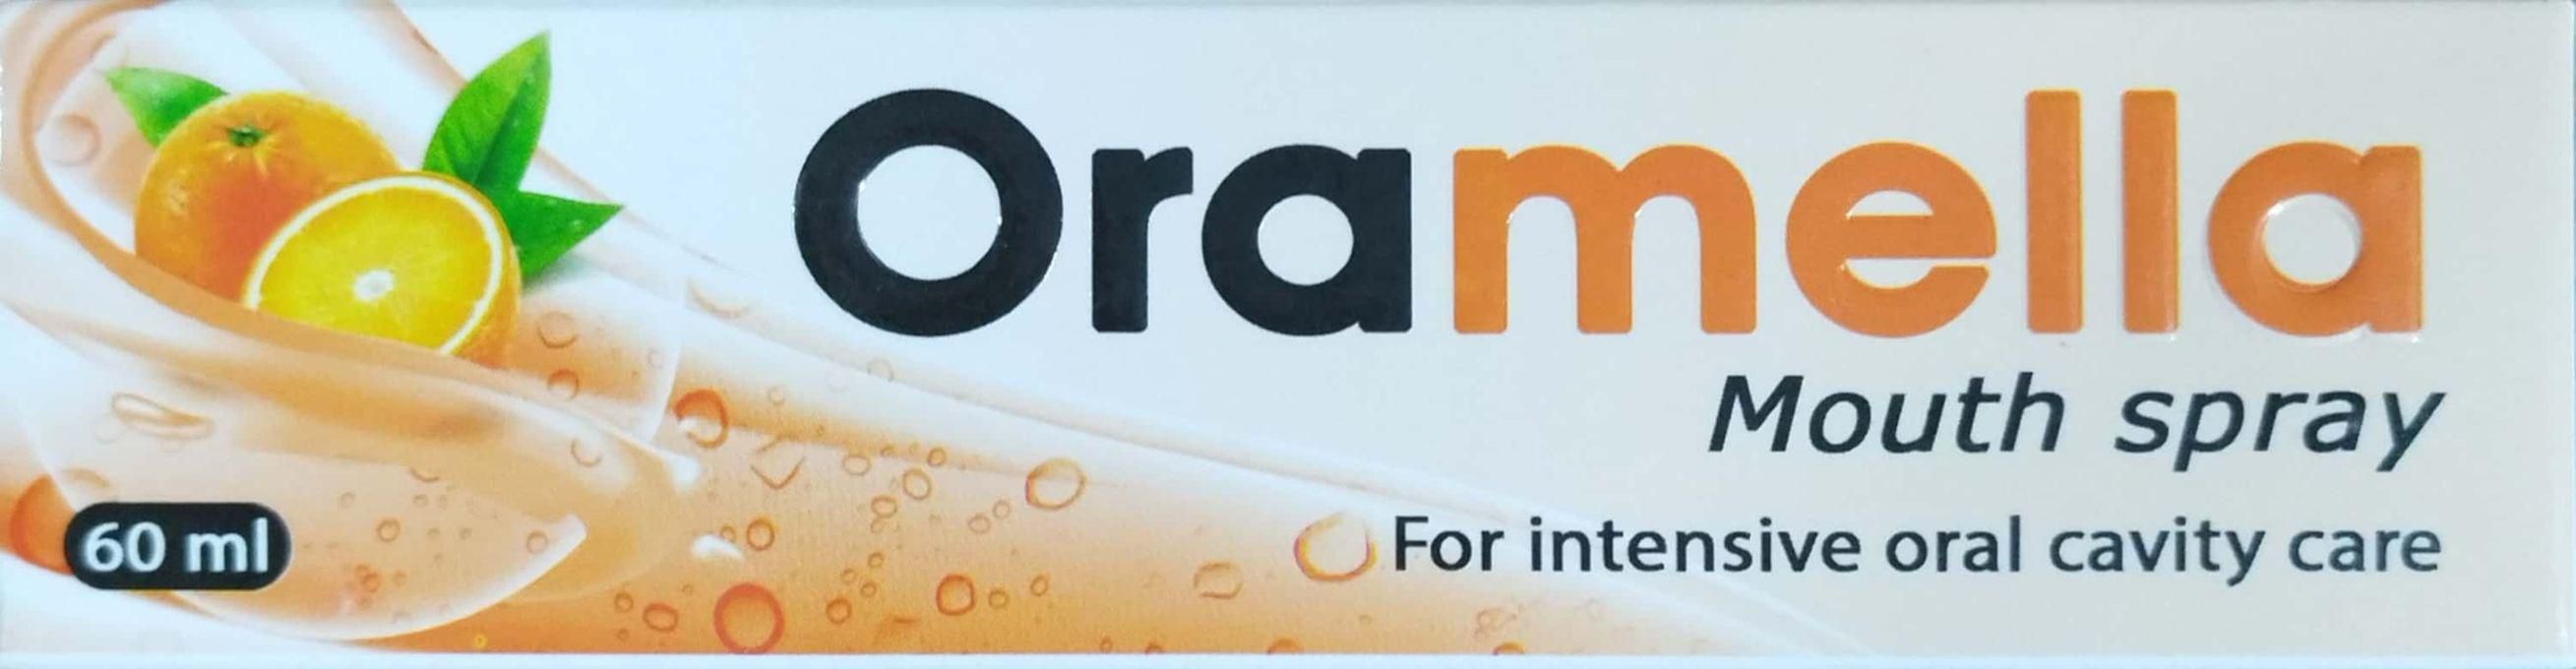 Oramella Mouth Spray With Orange Flavor - 60 ML